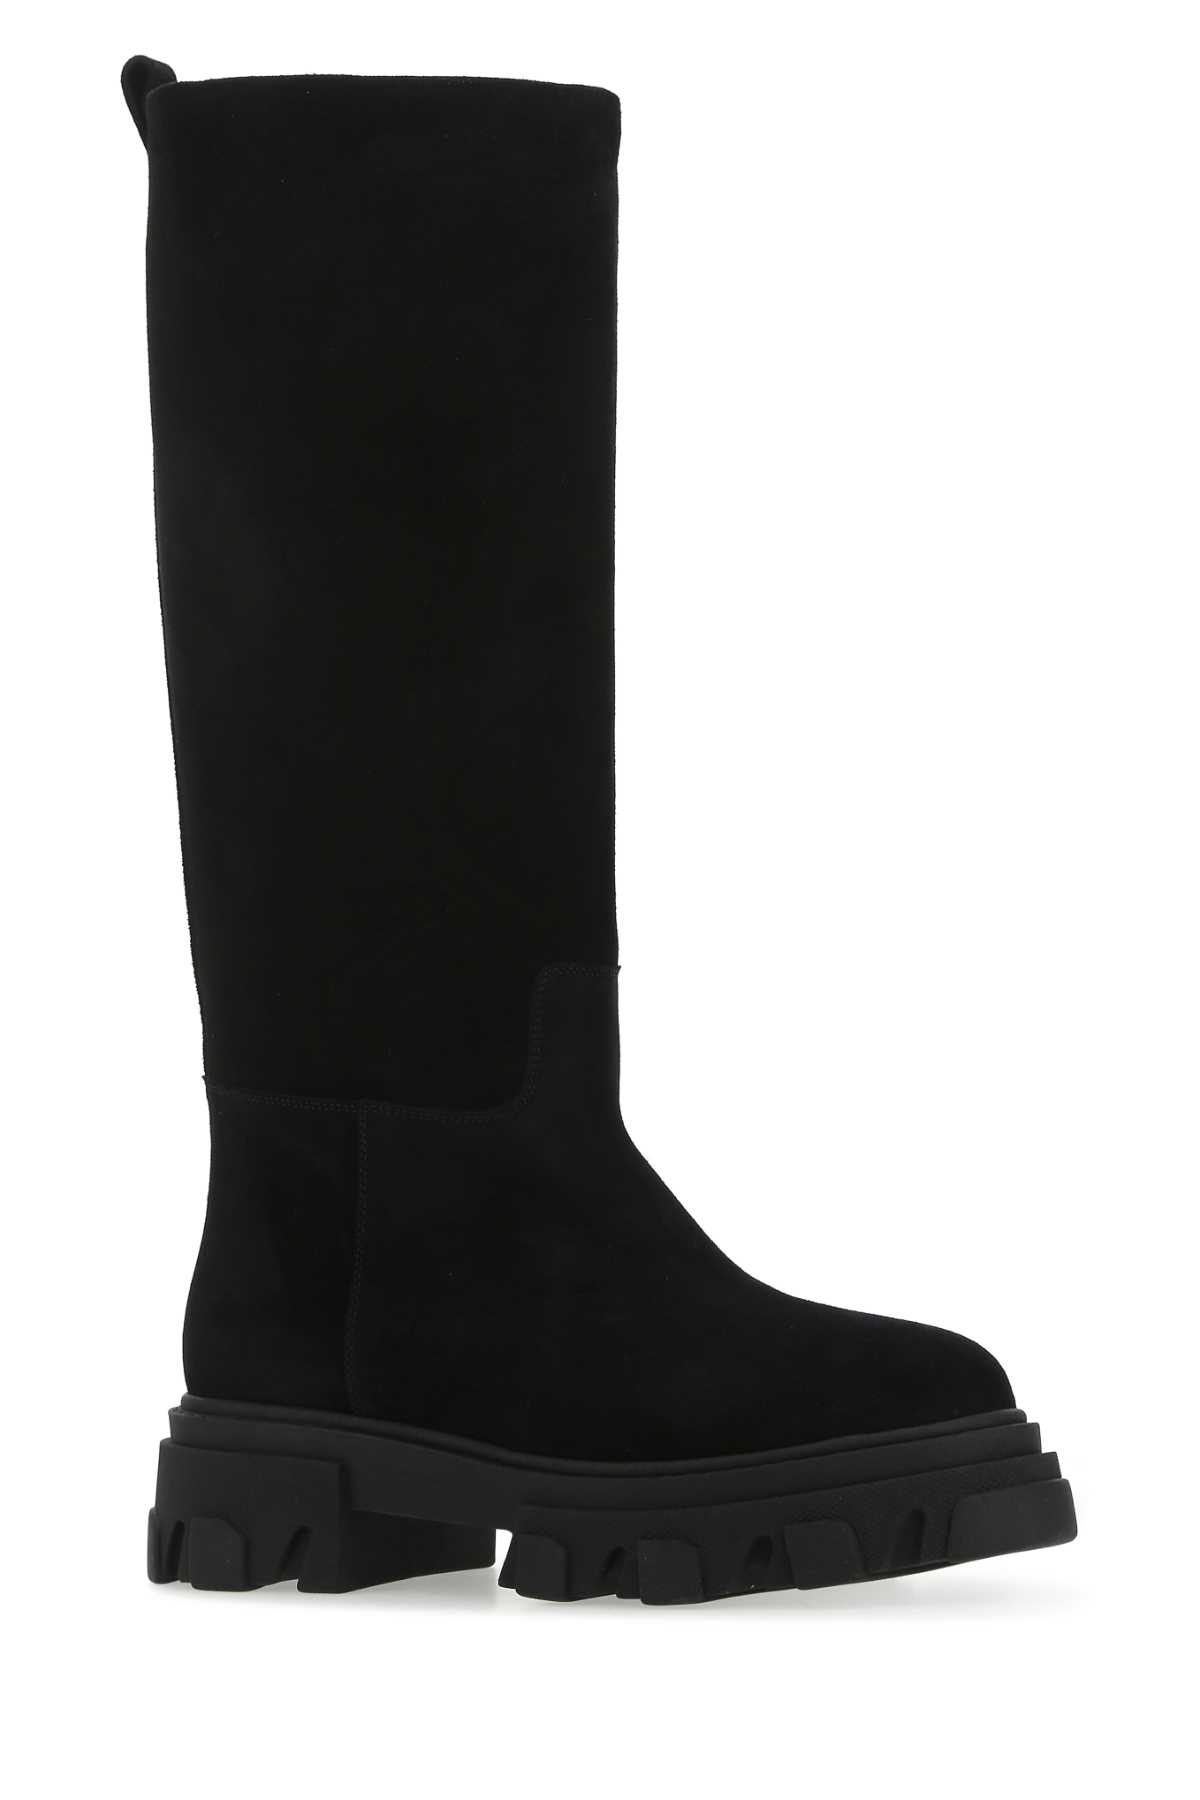 Gia Borghini Black Suede Perni07 Boots In 5000